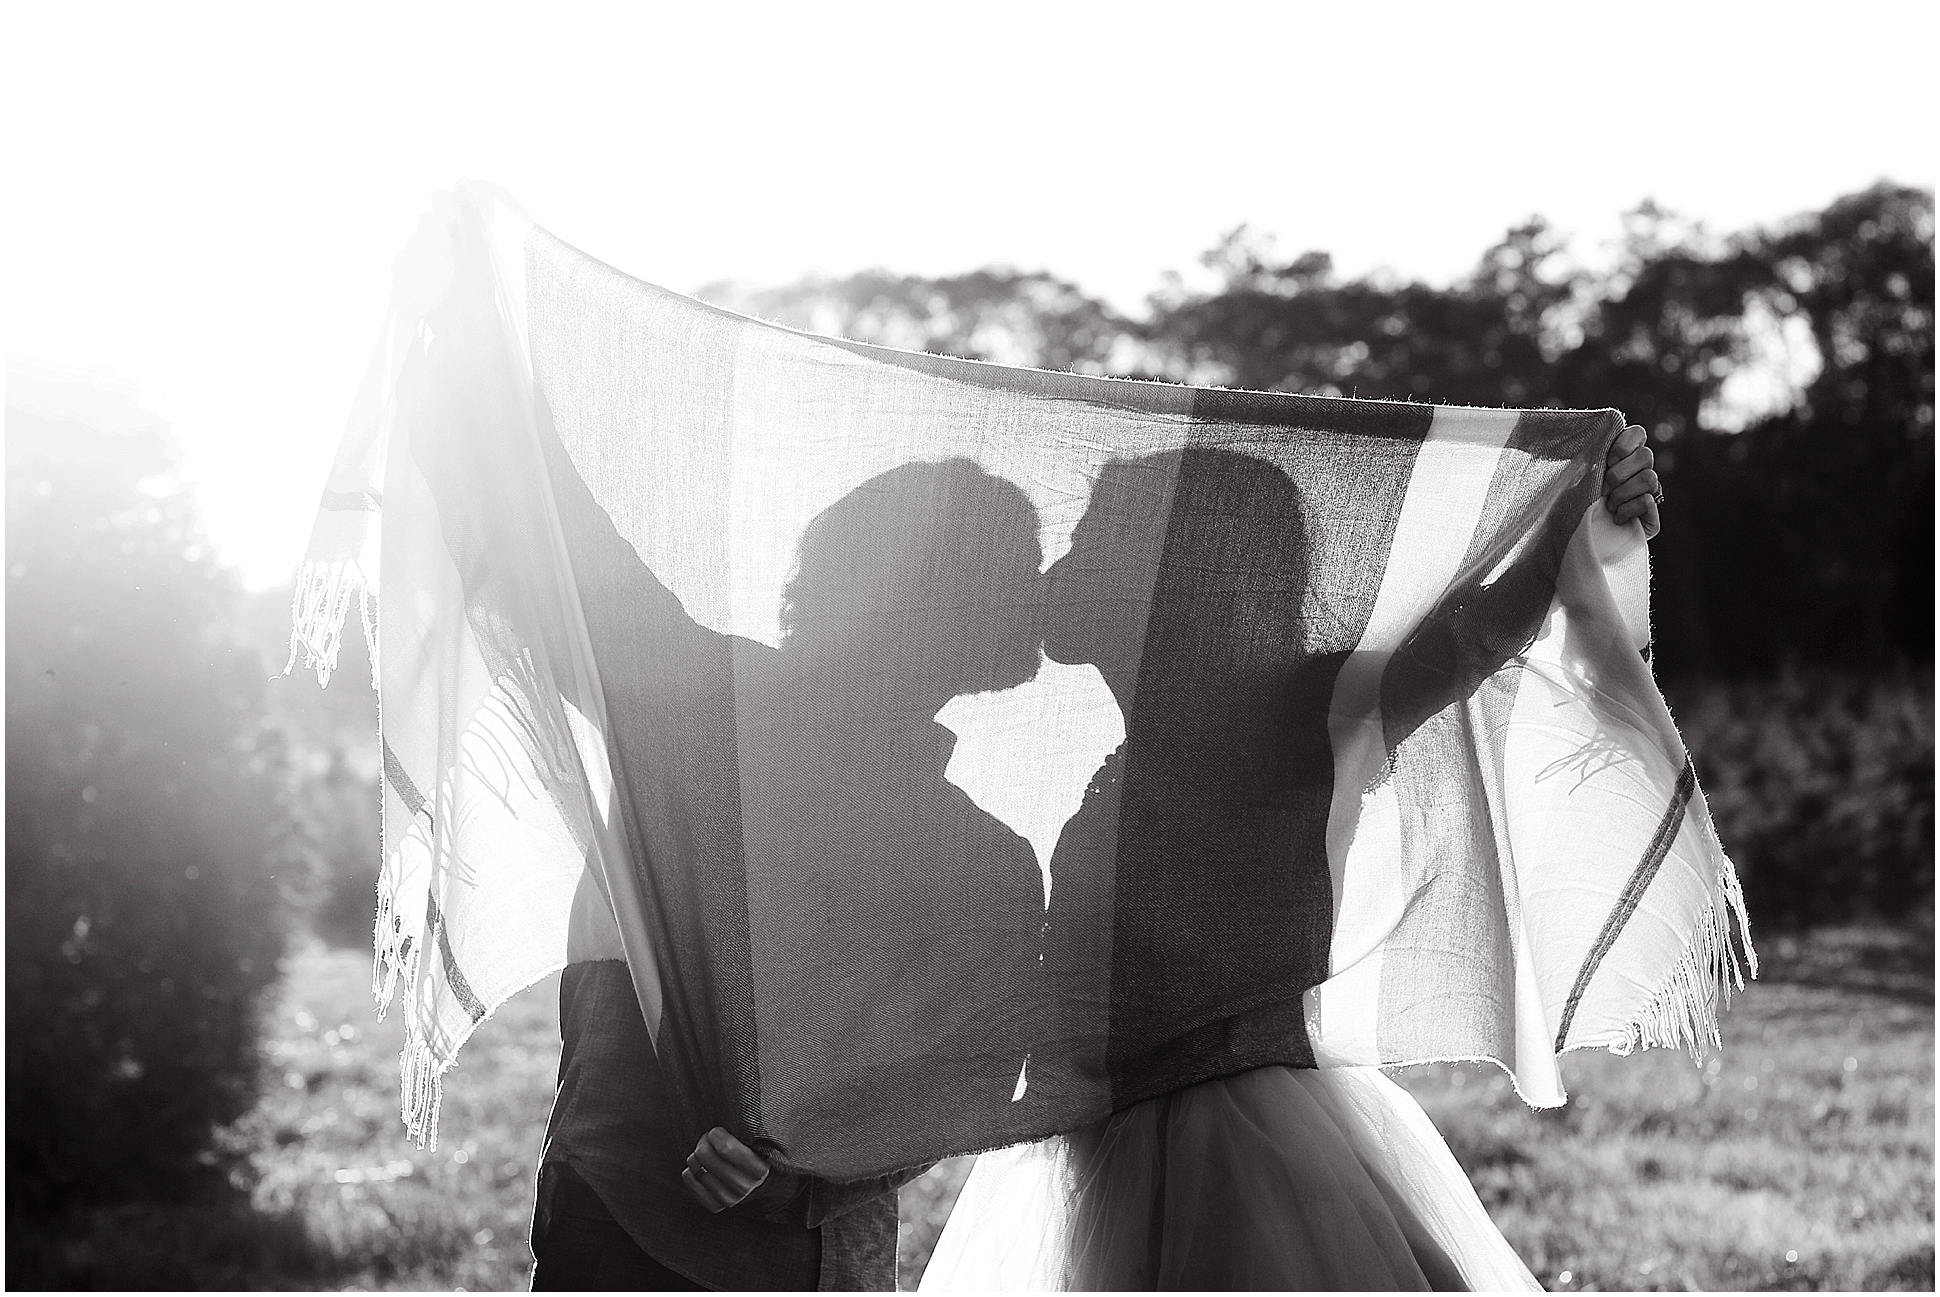 www.twochicsphotography.com | A Romantic Session at a Tree Farm | Macon, Ga Wedding Photographers